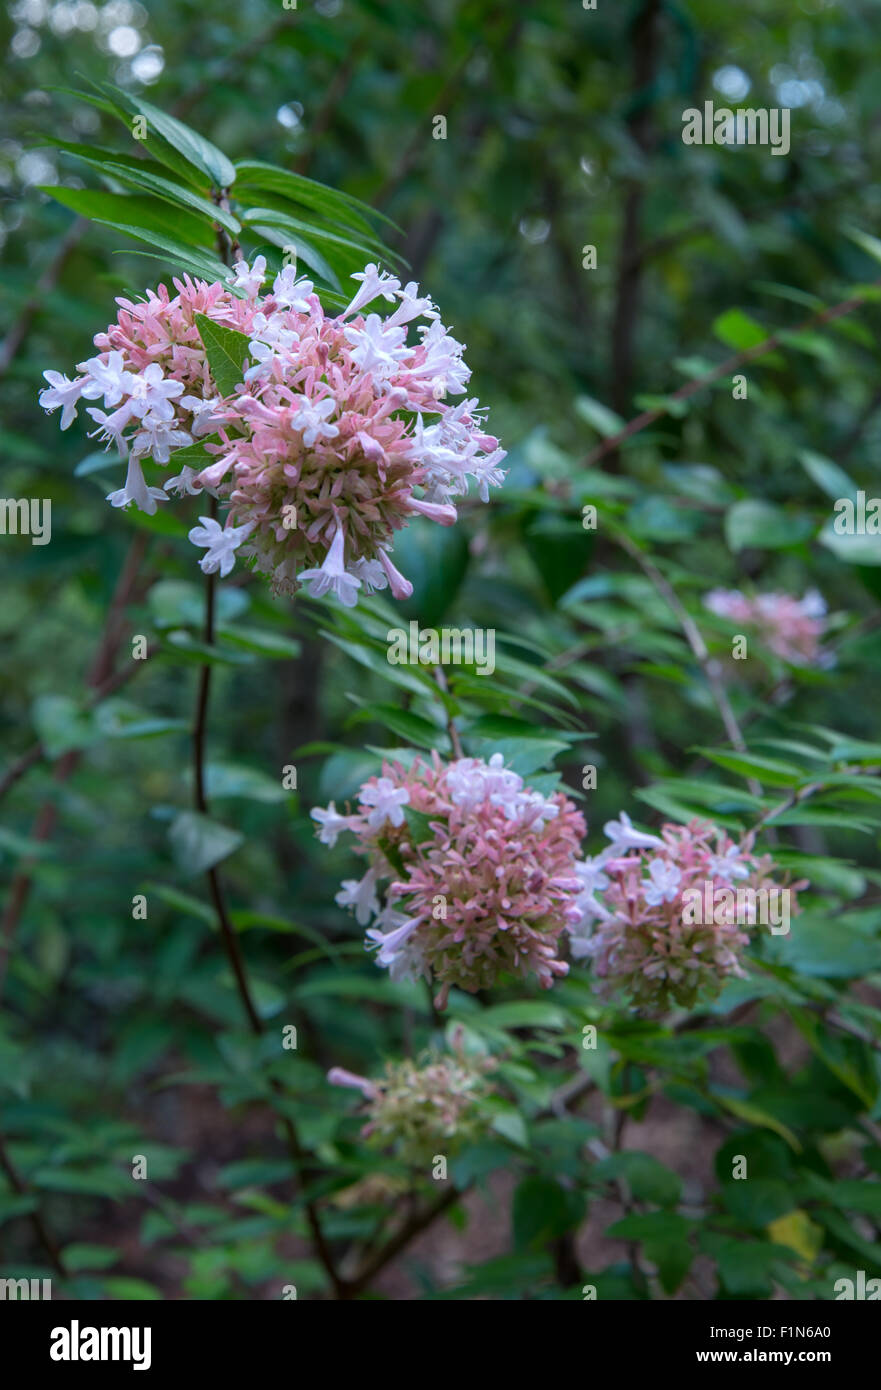 Abelia , Abelia ×grandiflora,  Canyon Creek, flower cluster, Stock Photo